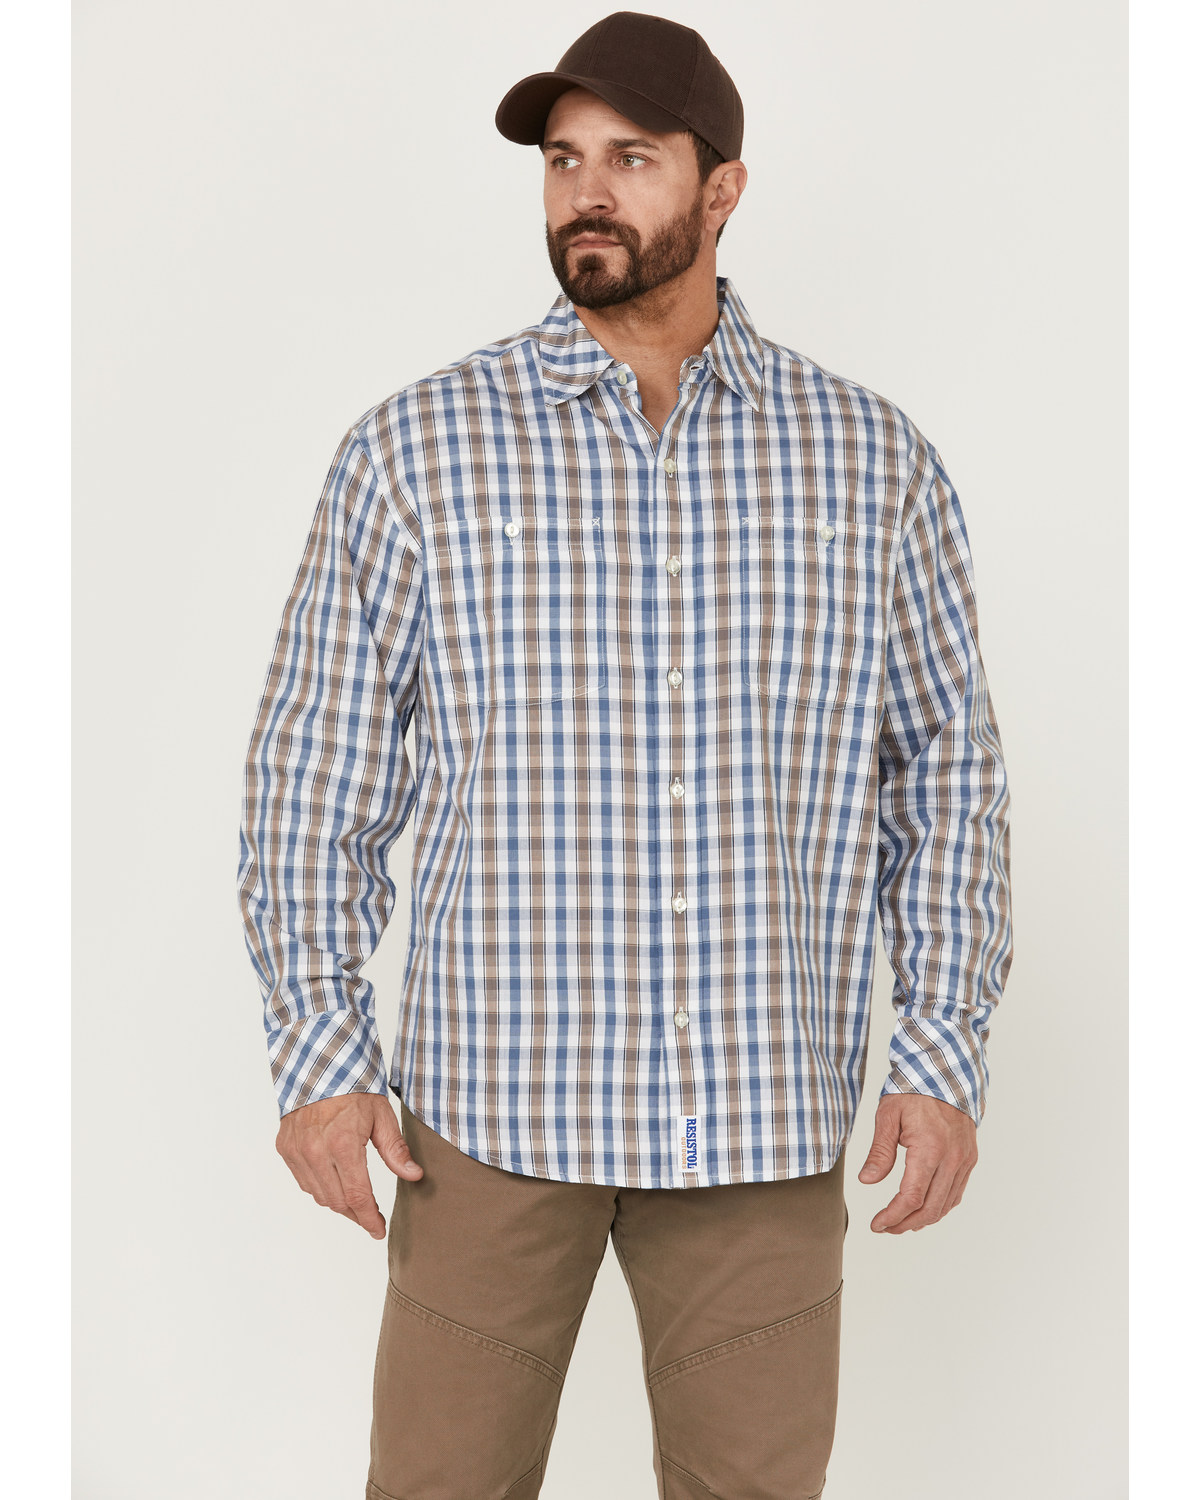 Resistol Men's Starke Small Plaid Long Sleeve Button Down Western Shirt